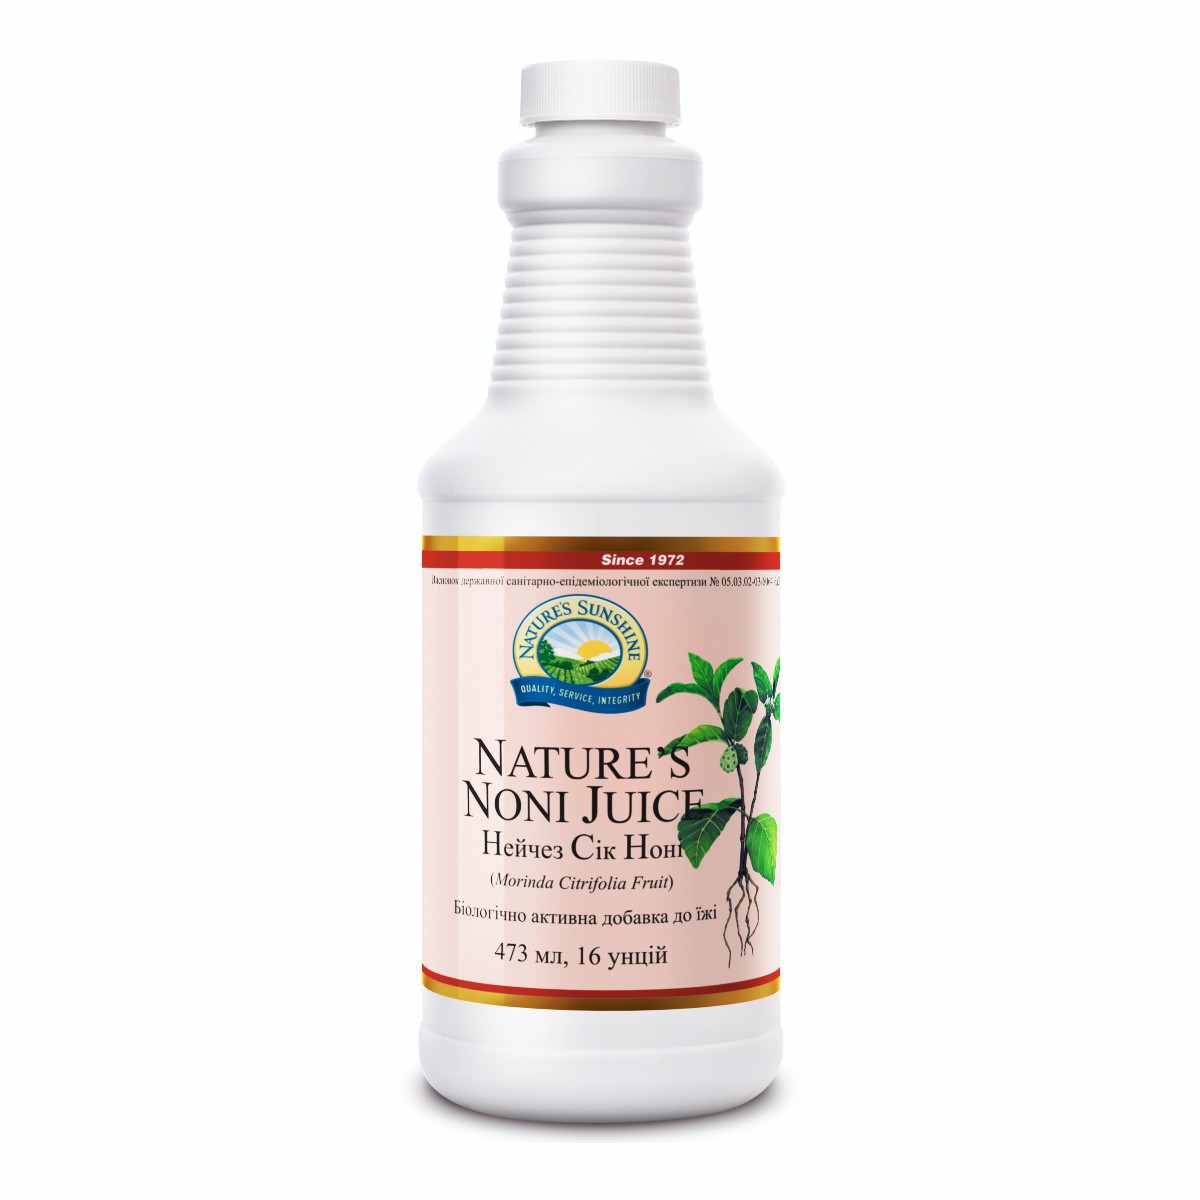 Nature’s Noni Juice - Сок Нони (сок Моринды) - БАД Nature's Sunshine Products (NSP)